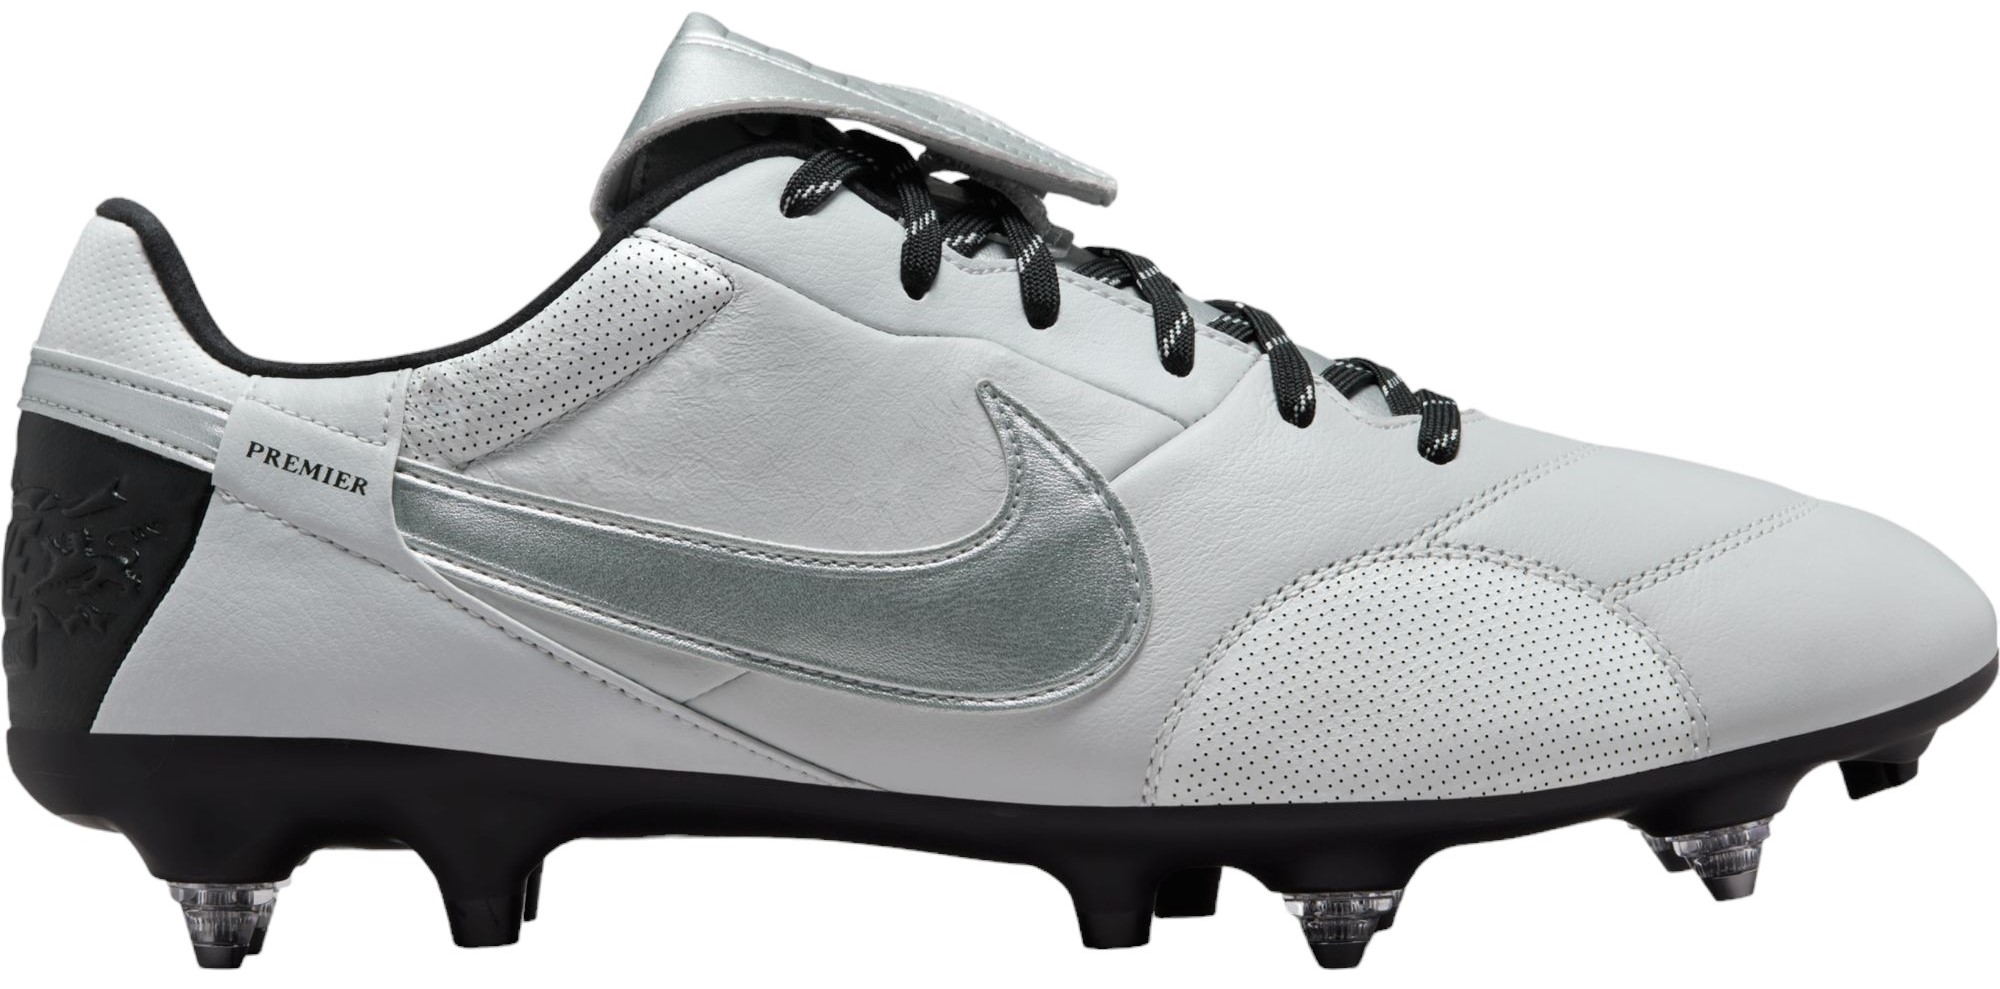 Chaussures de football Nike THE PREMIER III SG-PRO AC